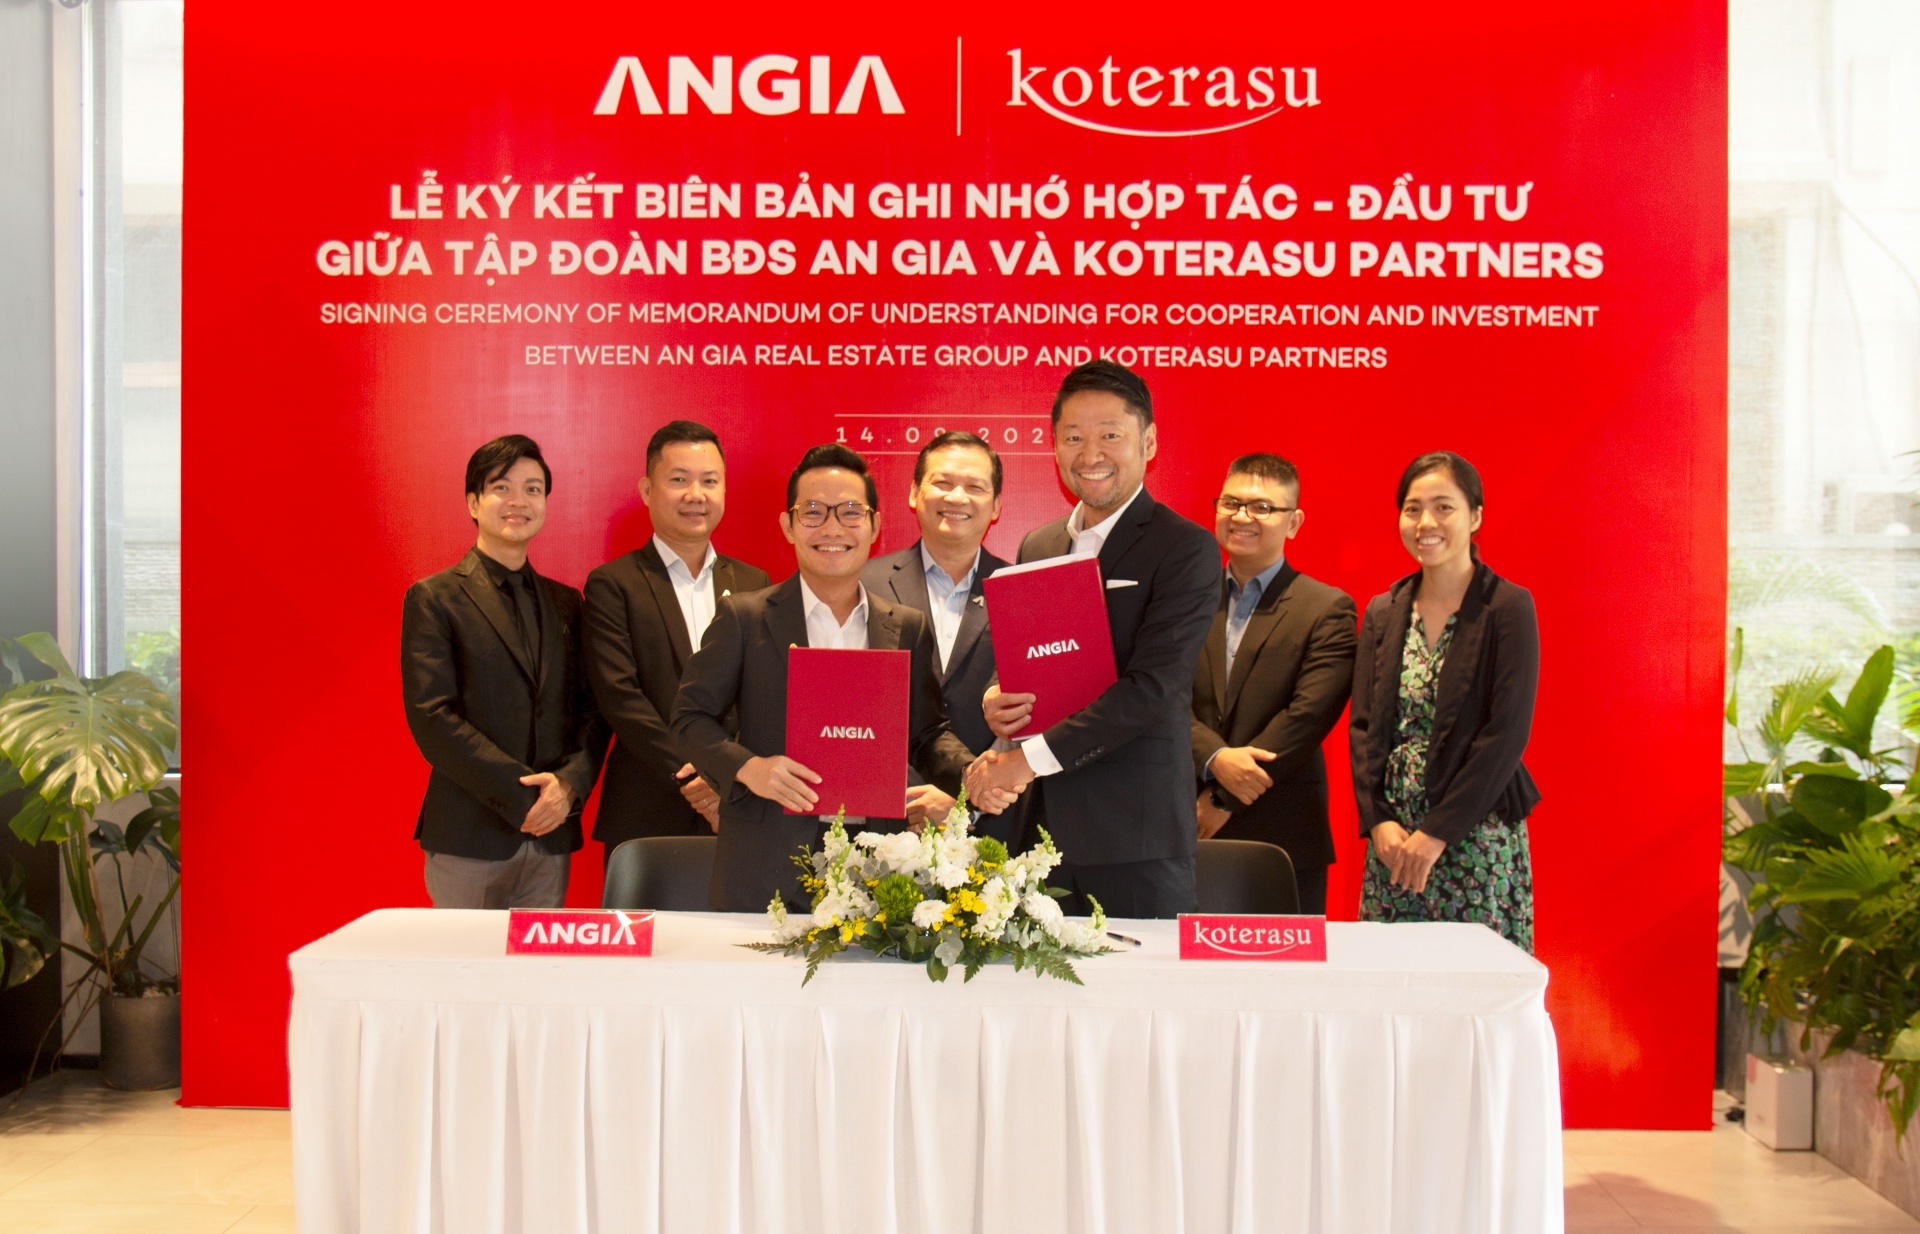 Koterasu reaches $10 million investment agreement with An Gia